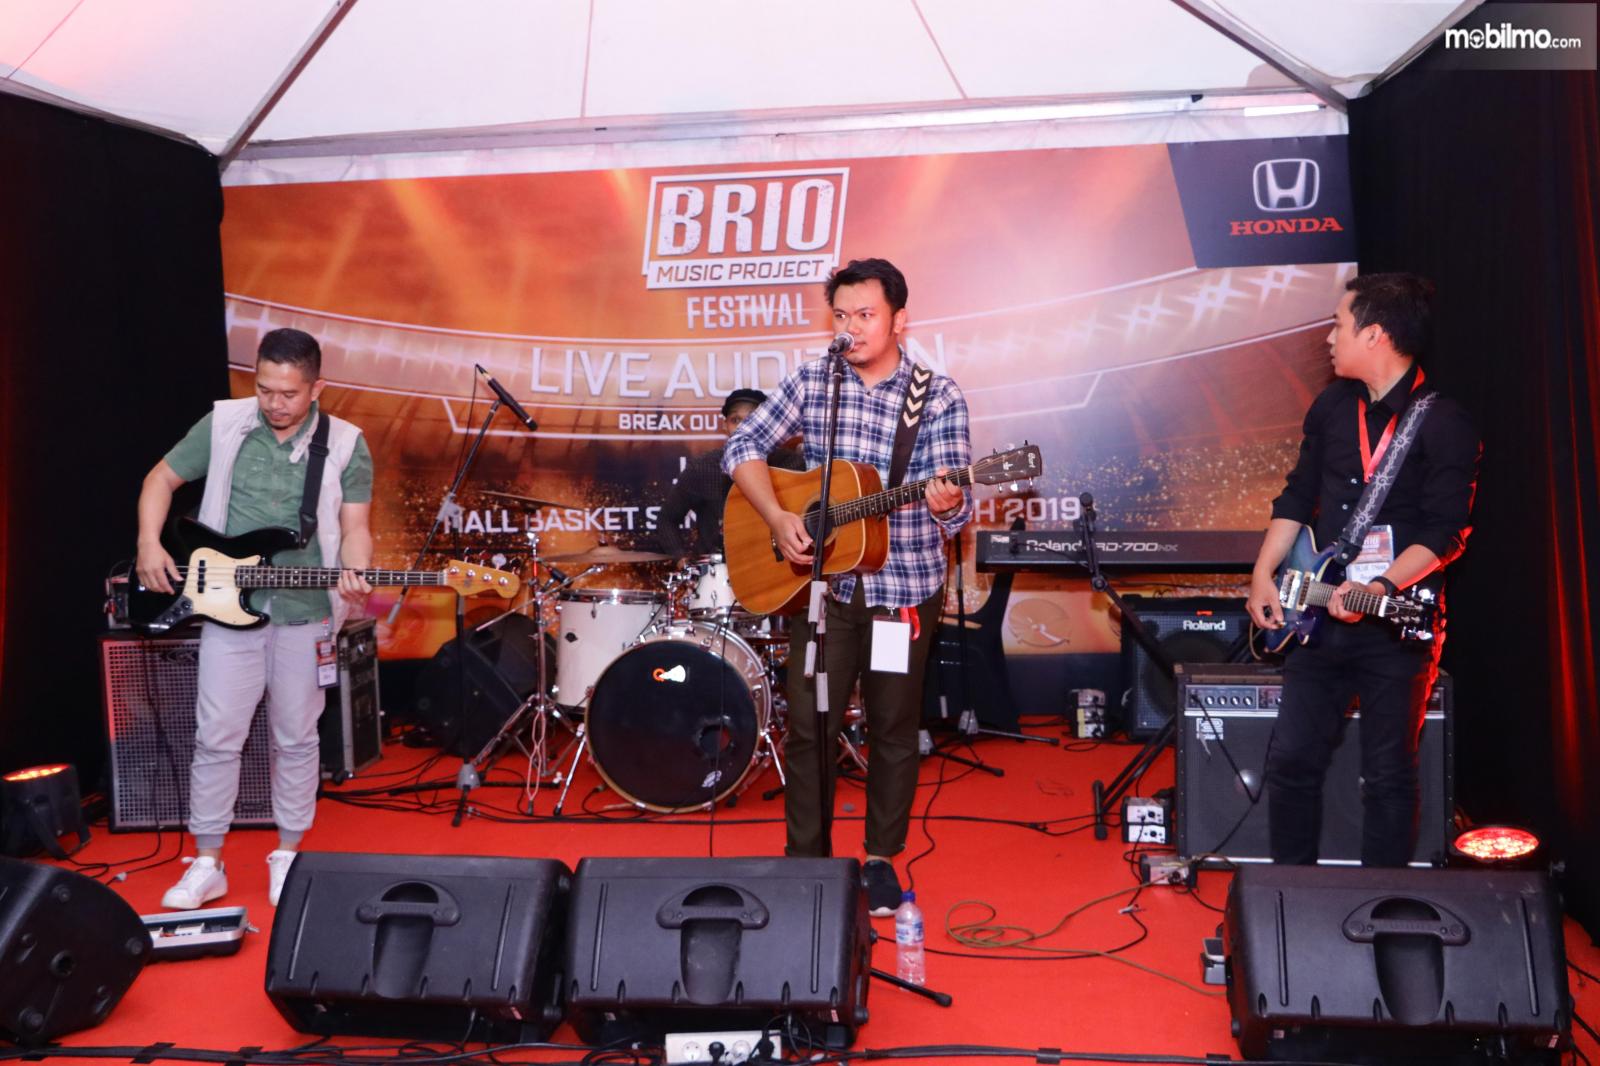 Salah satu band sedang perform di acara Brio Music Project Festival Kota Bandung, Jawa Barat, 5 April 2019